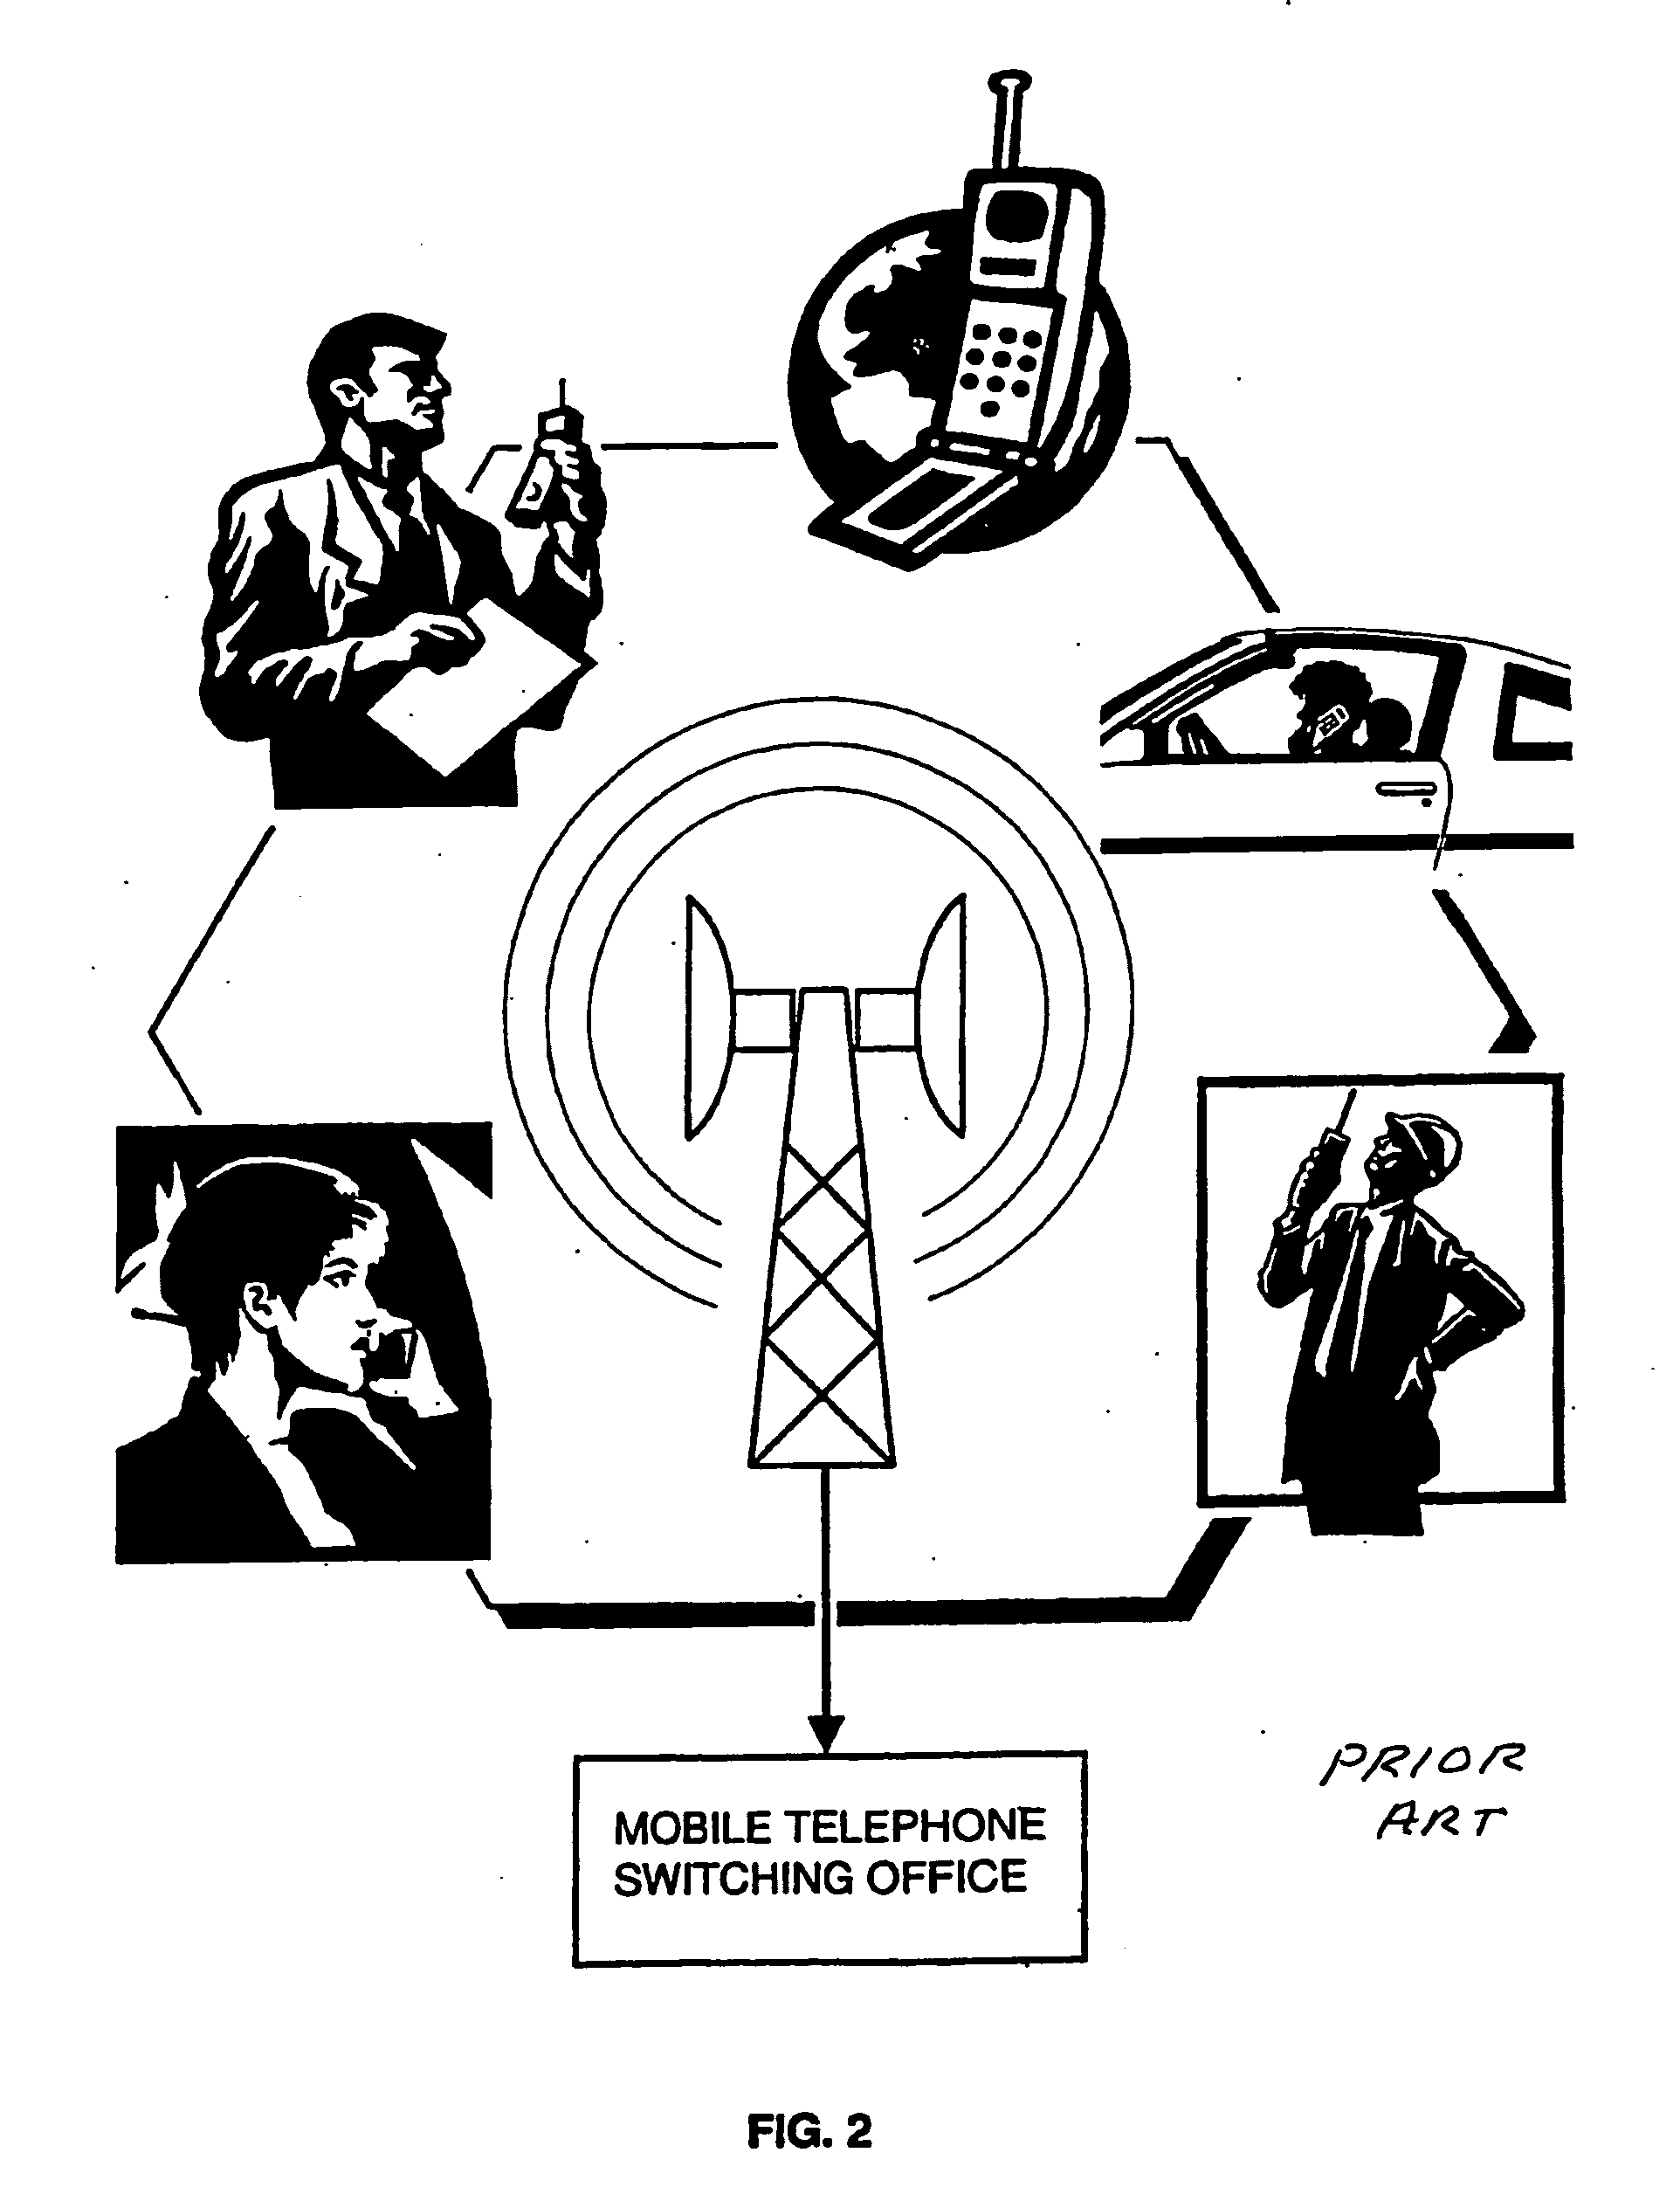 Wireless communication system